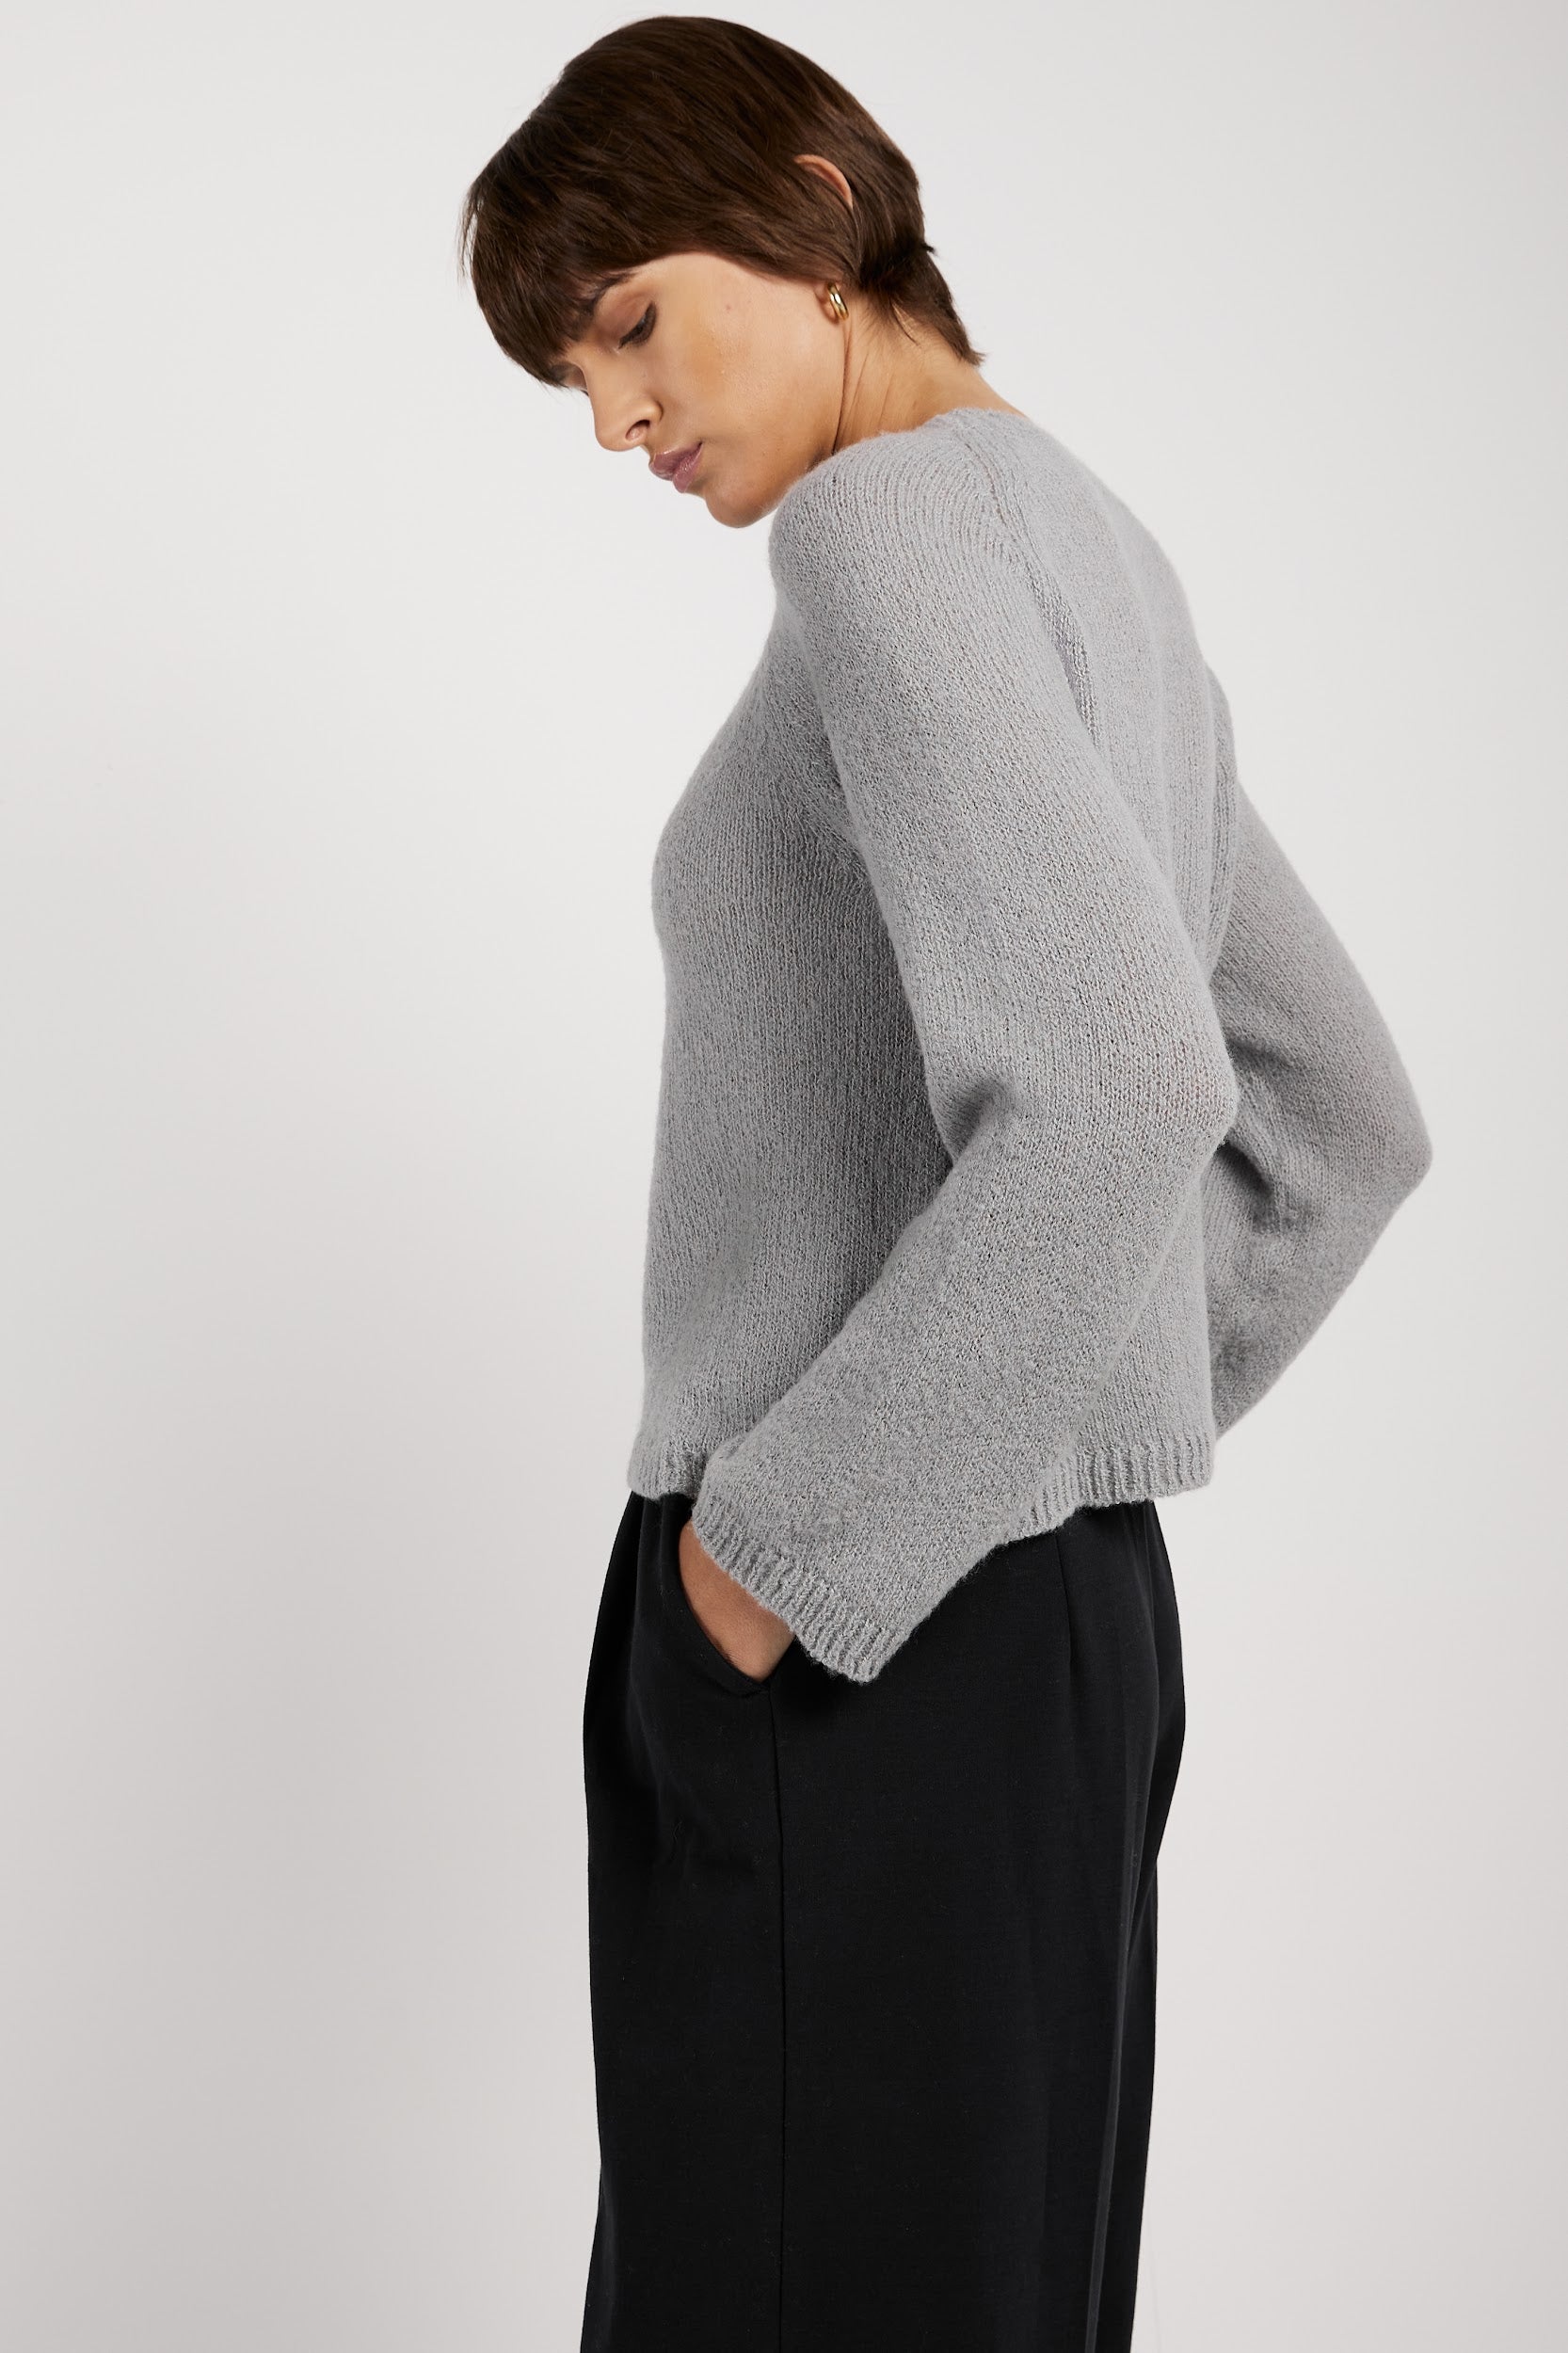 PRIVATE 0204 Bouclé Sweater in Heather Grey